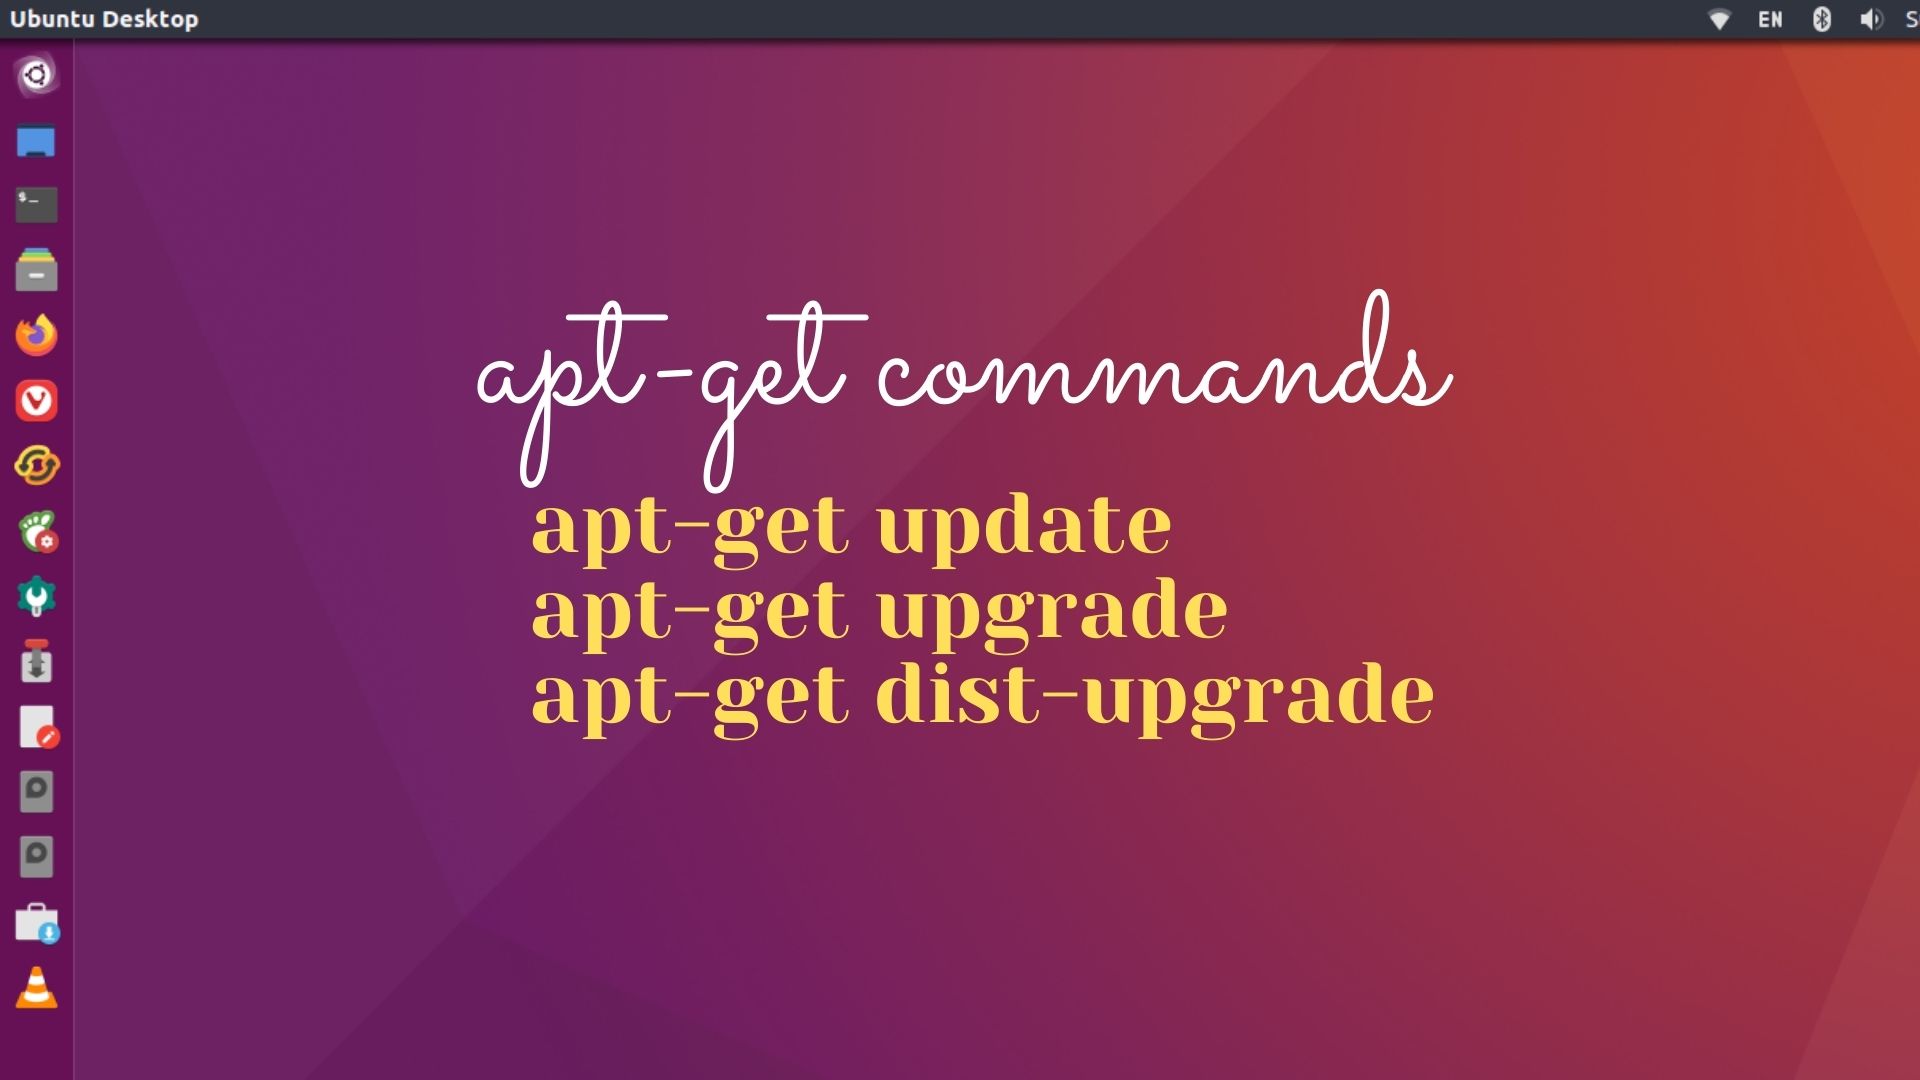 sudo apt upgrade command not working